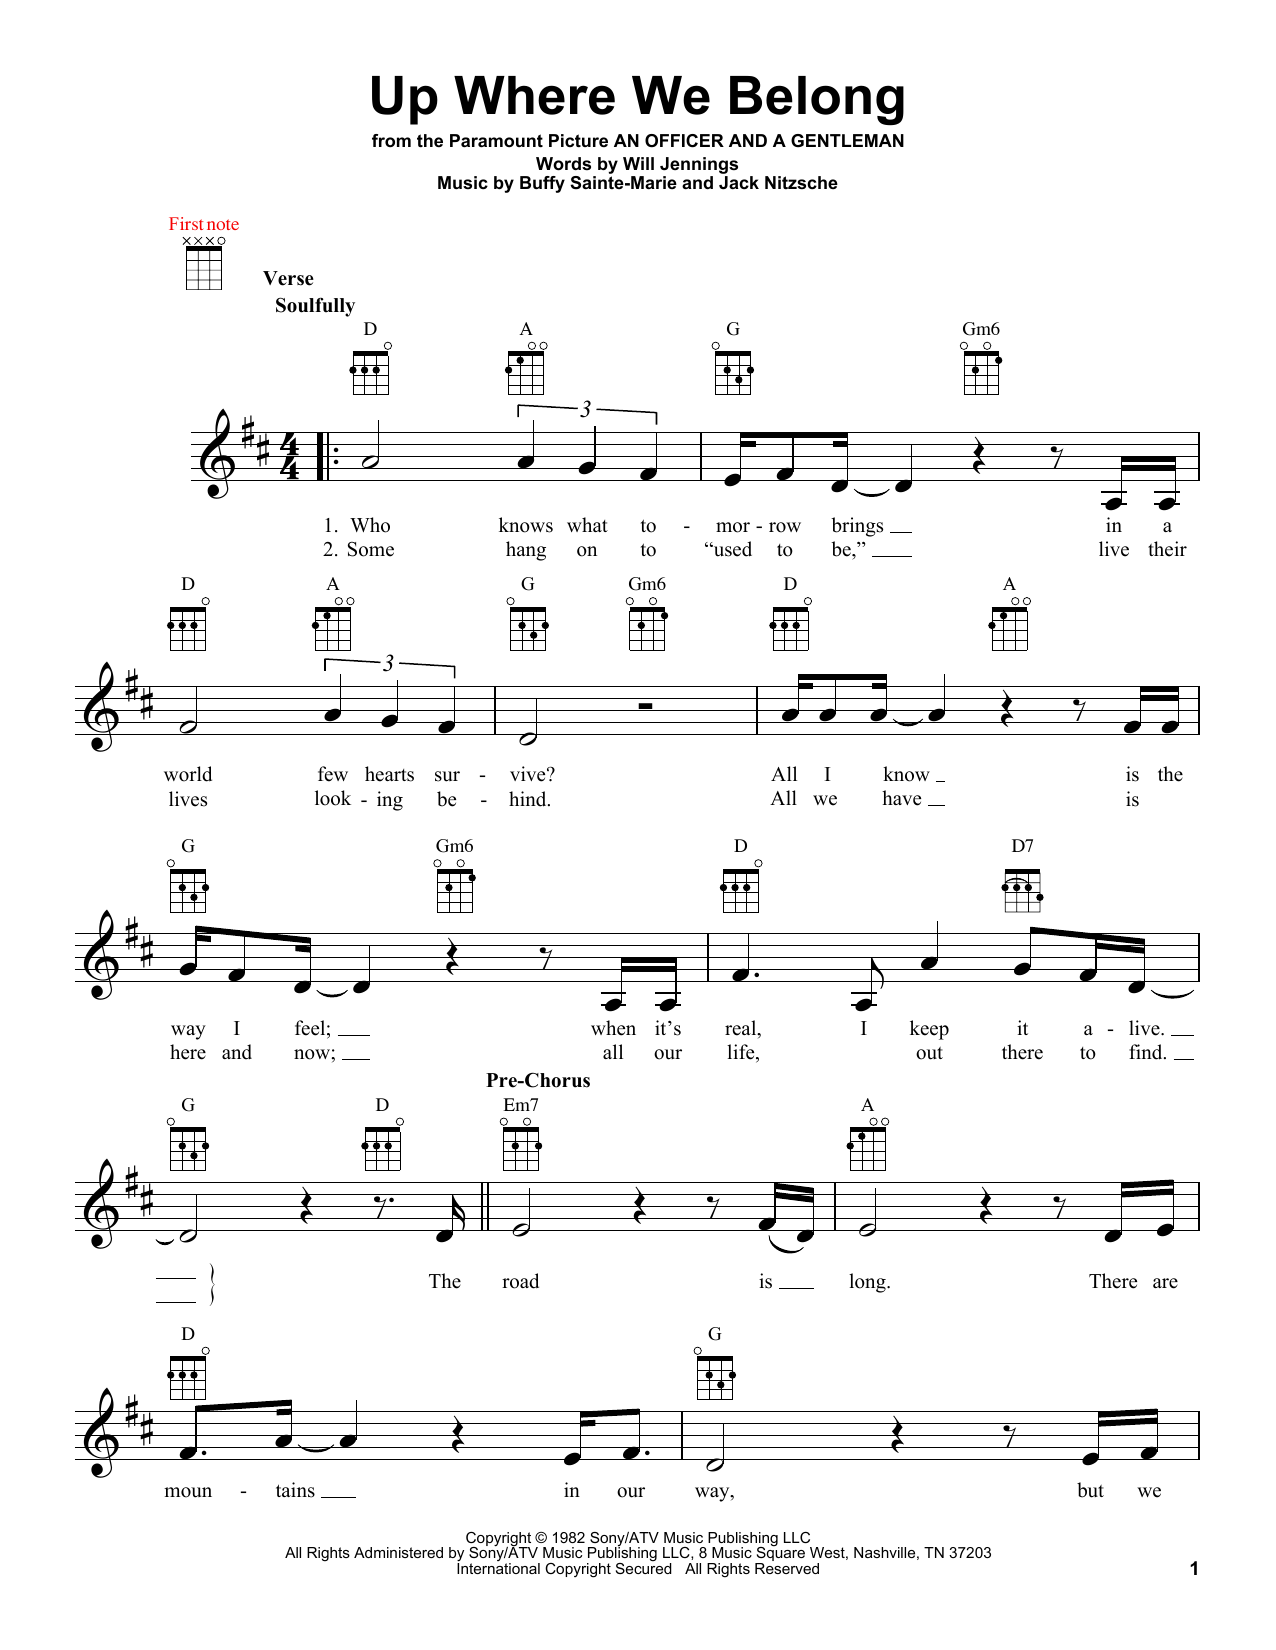 Joe Cocker & Jennifer Warnes Up Where We Belong Sheet Music Notes & Chords for Alto Saxophone - Download or Print PDF